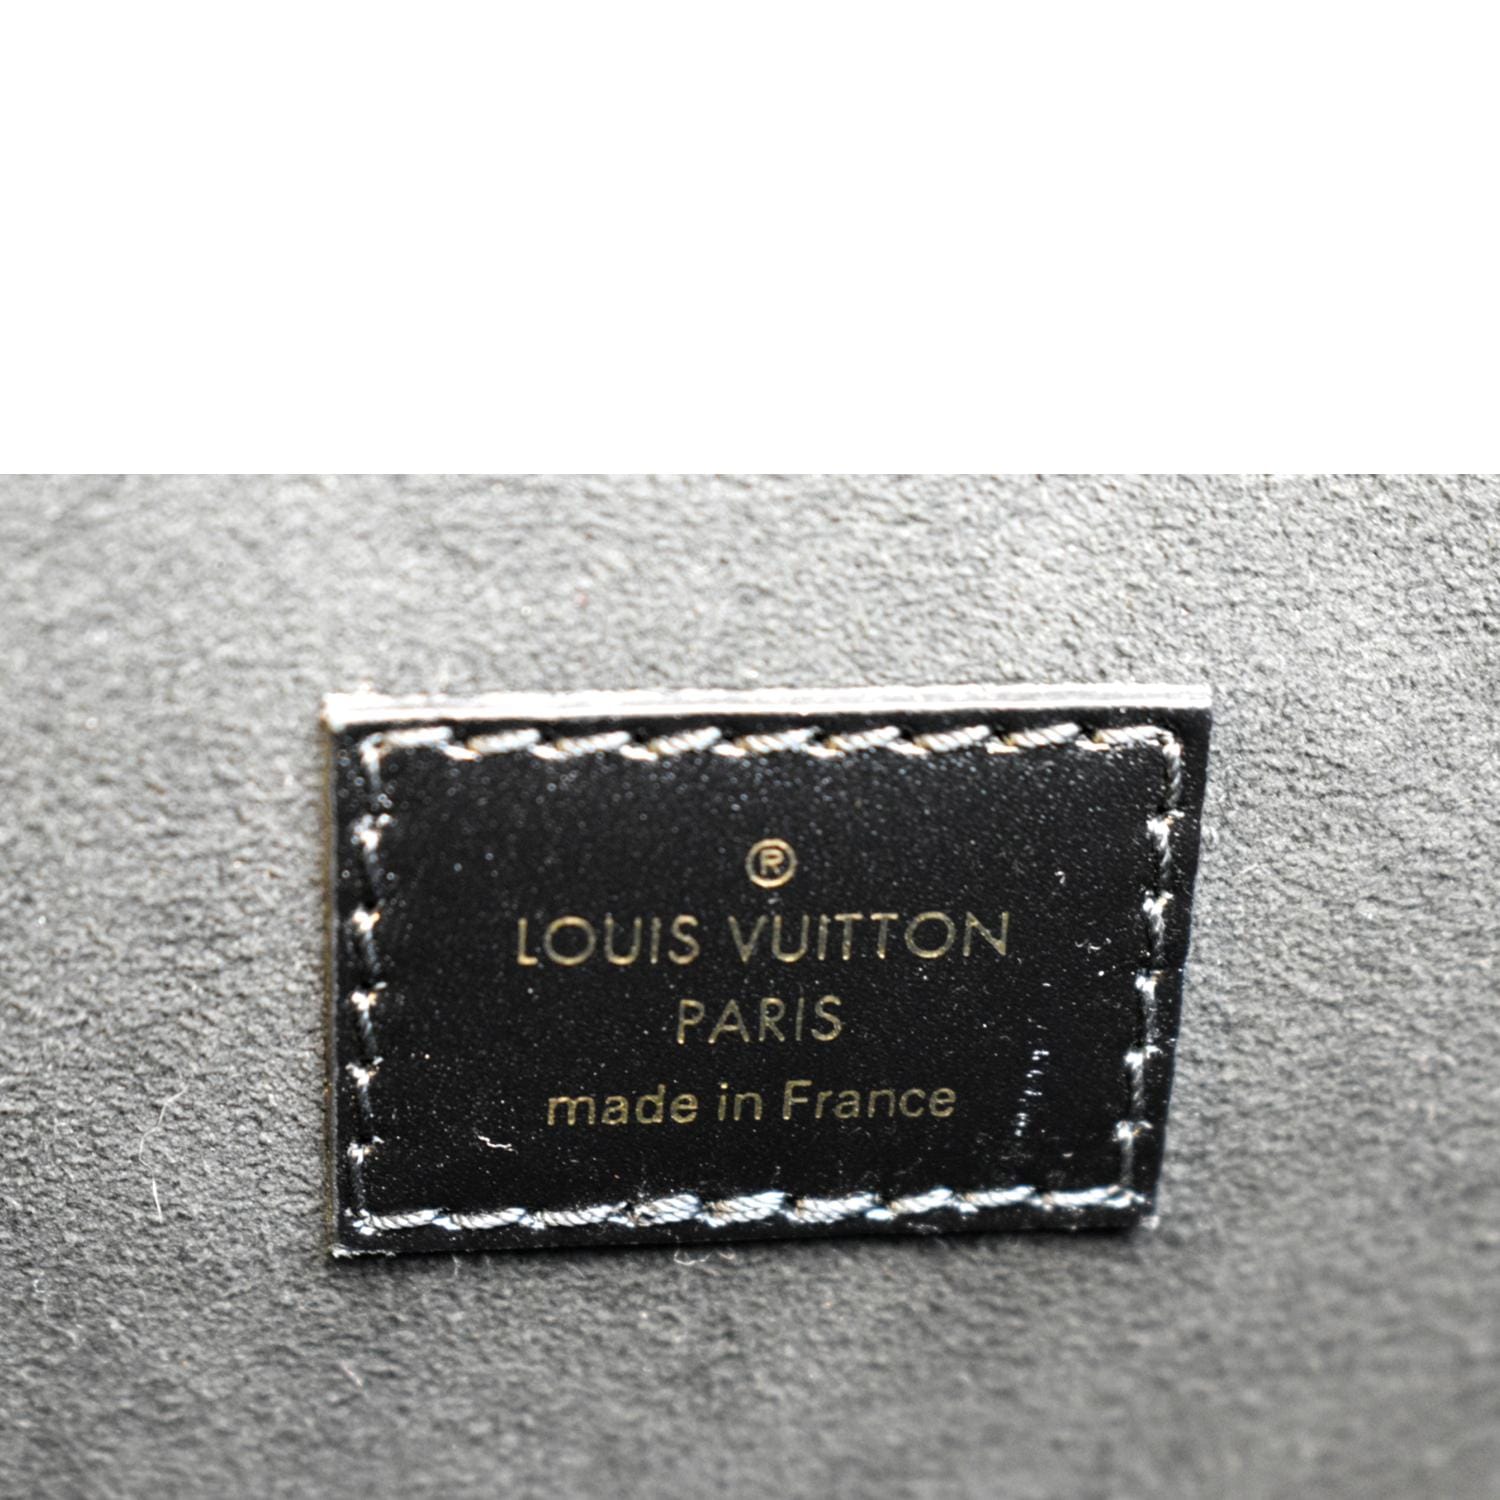 LOUIS VUITTON ®Dauphine MM  Buy louis vuitton, Louis vuitton bag, Louis  vuitton handbags